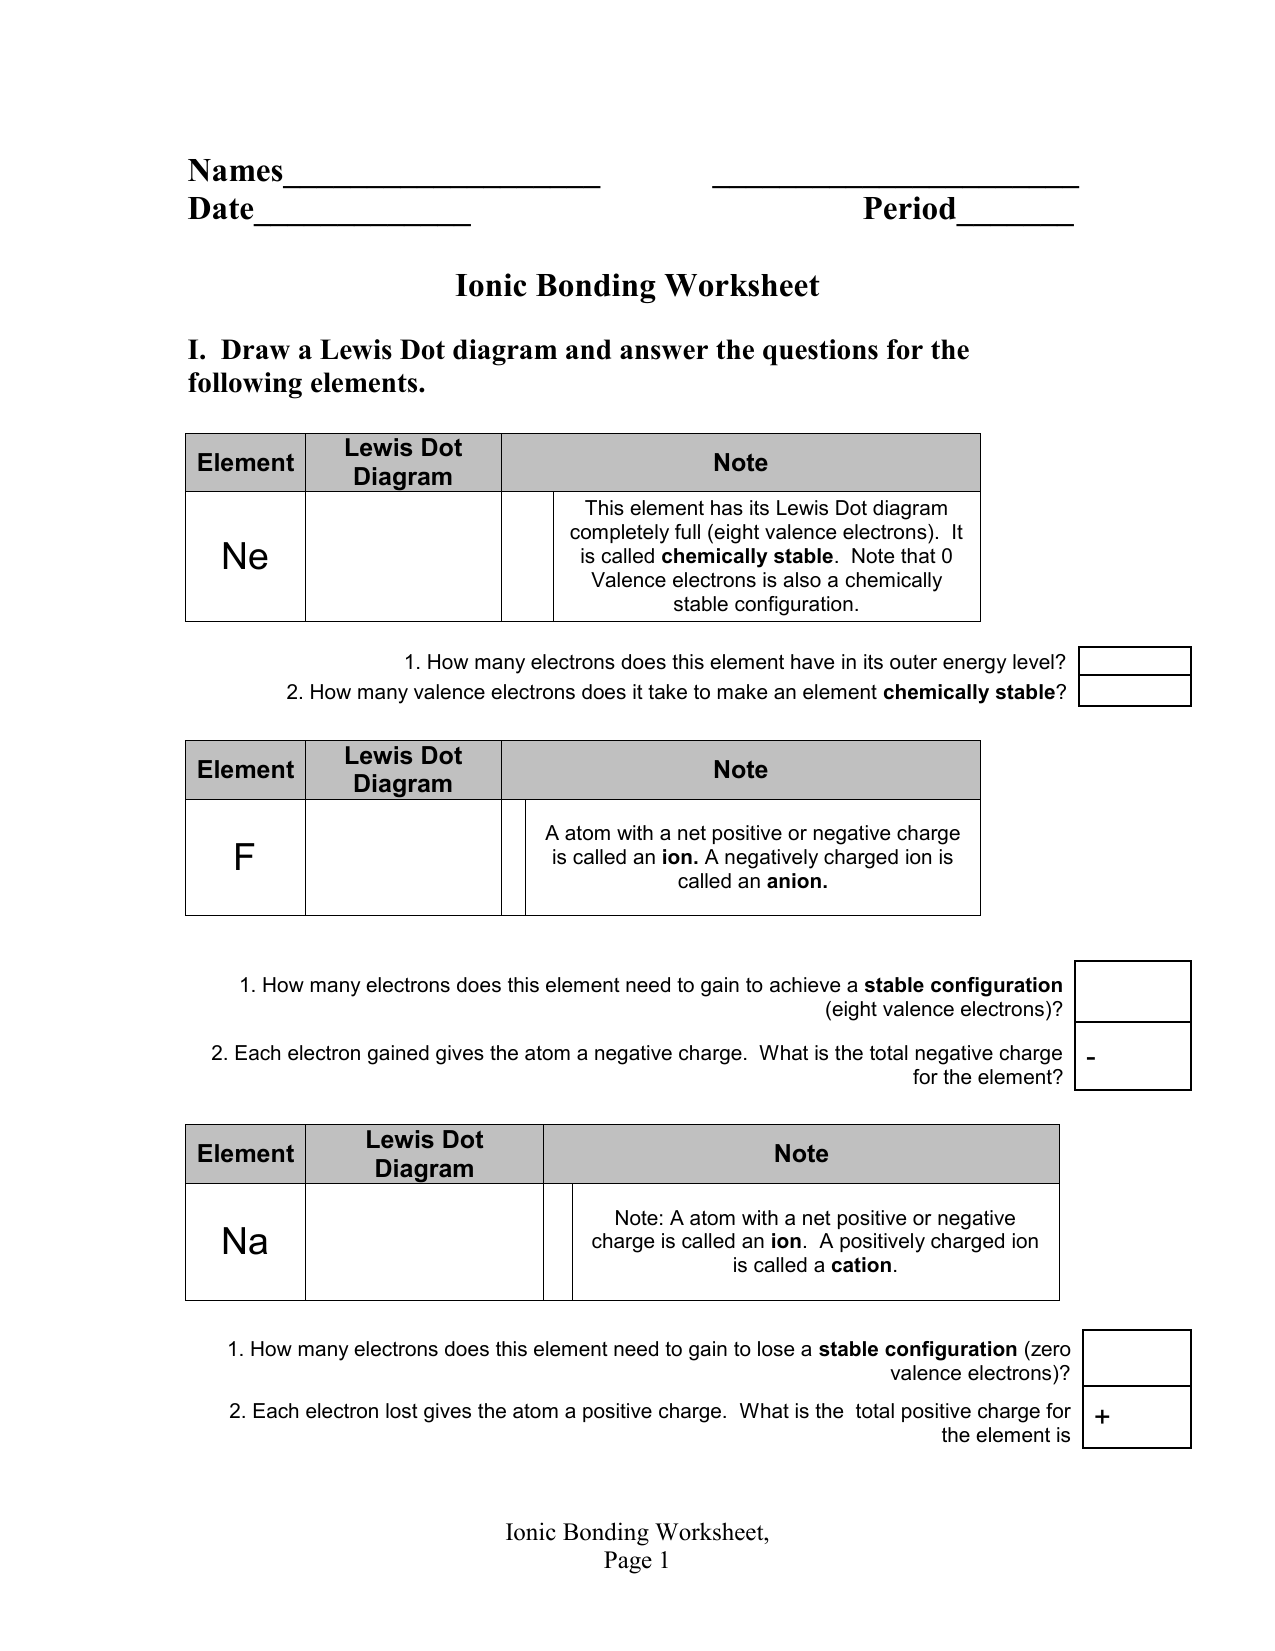 Ionic Bonding Worksheet With Regard To Ionic Bonding Worksheet Answers